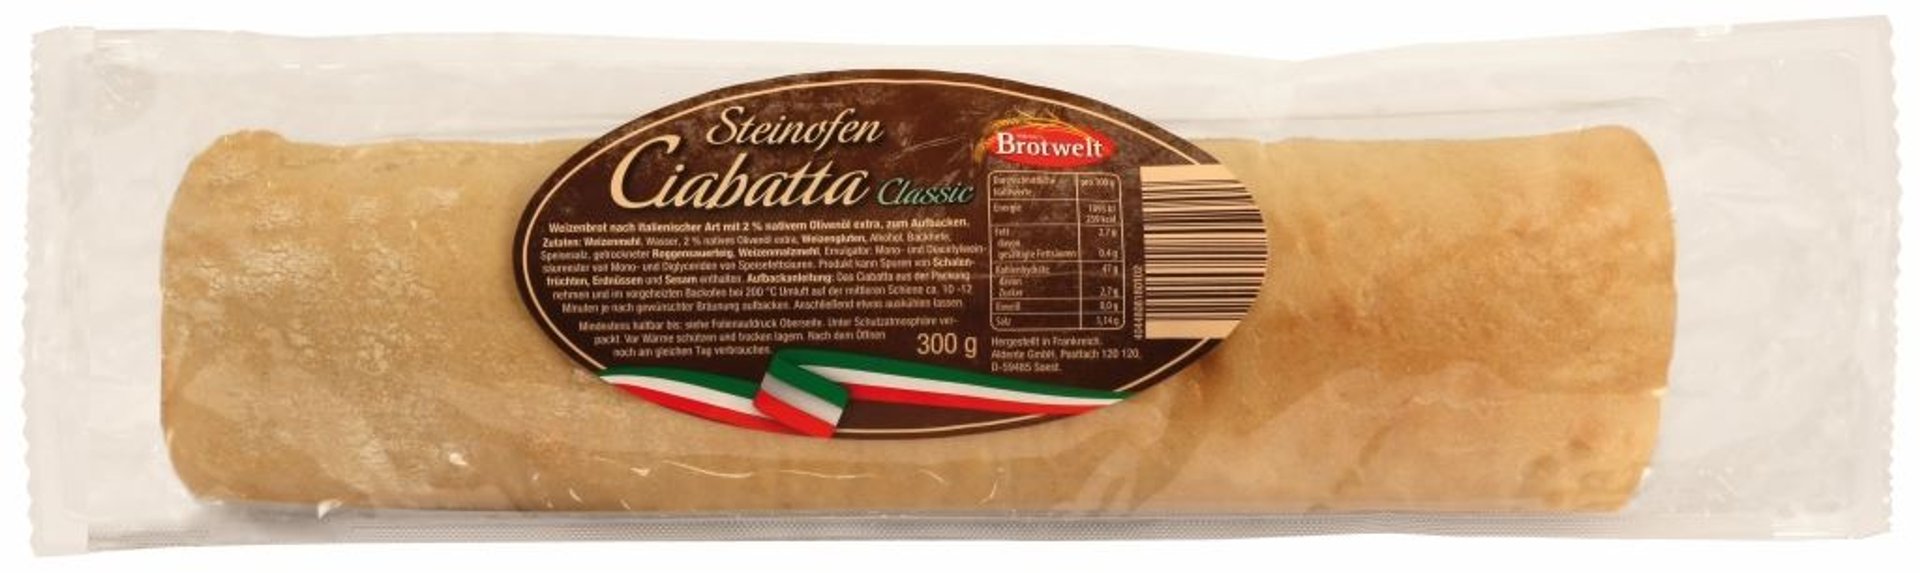 Brotwelt - Aktuell Ciabatta Brot Natur - 300 g Packung